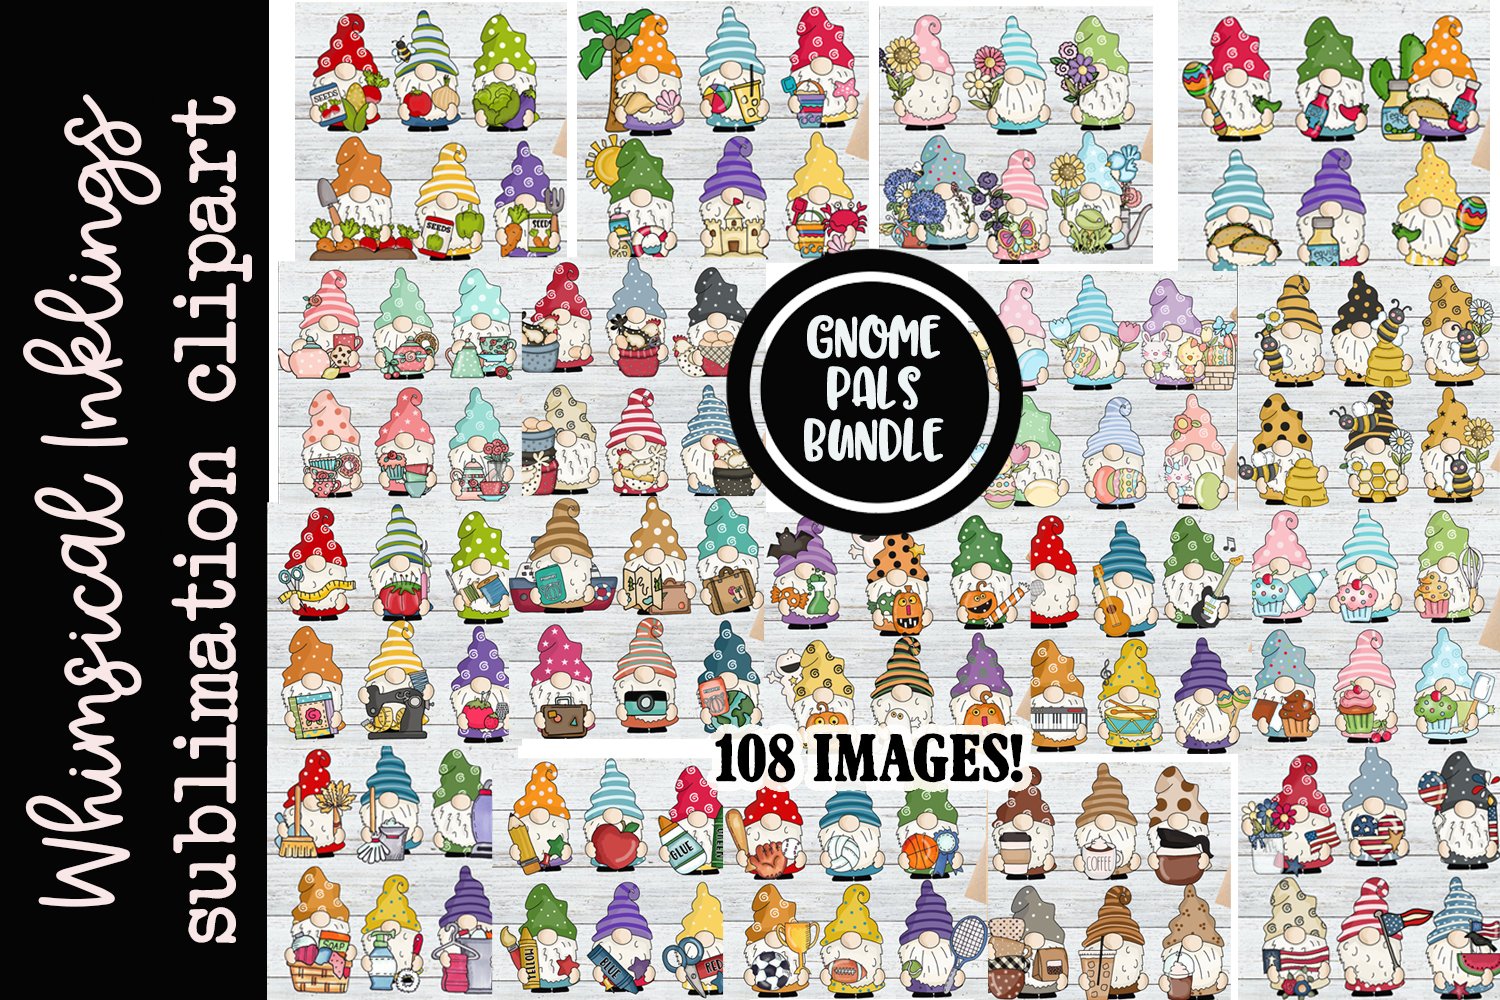 Cover image of Gnome pals Giant Sublimation Bundle.